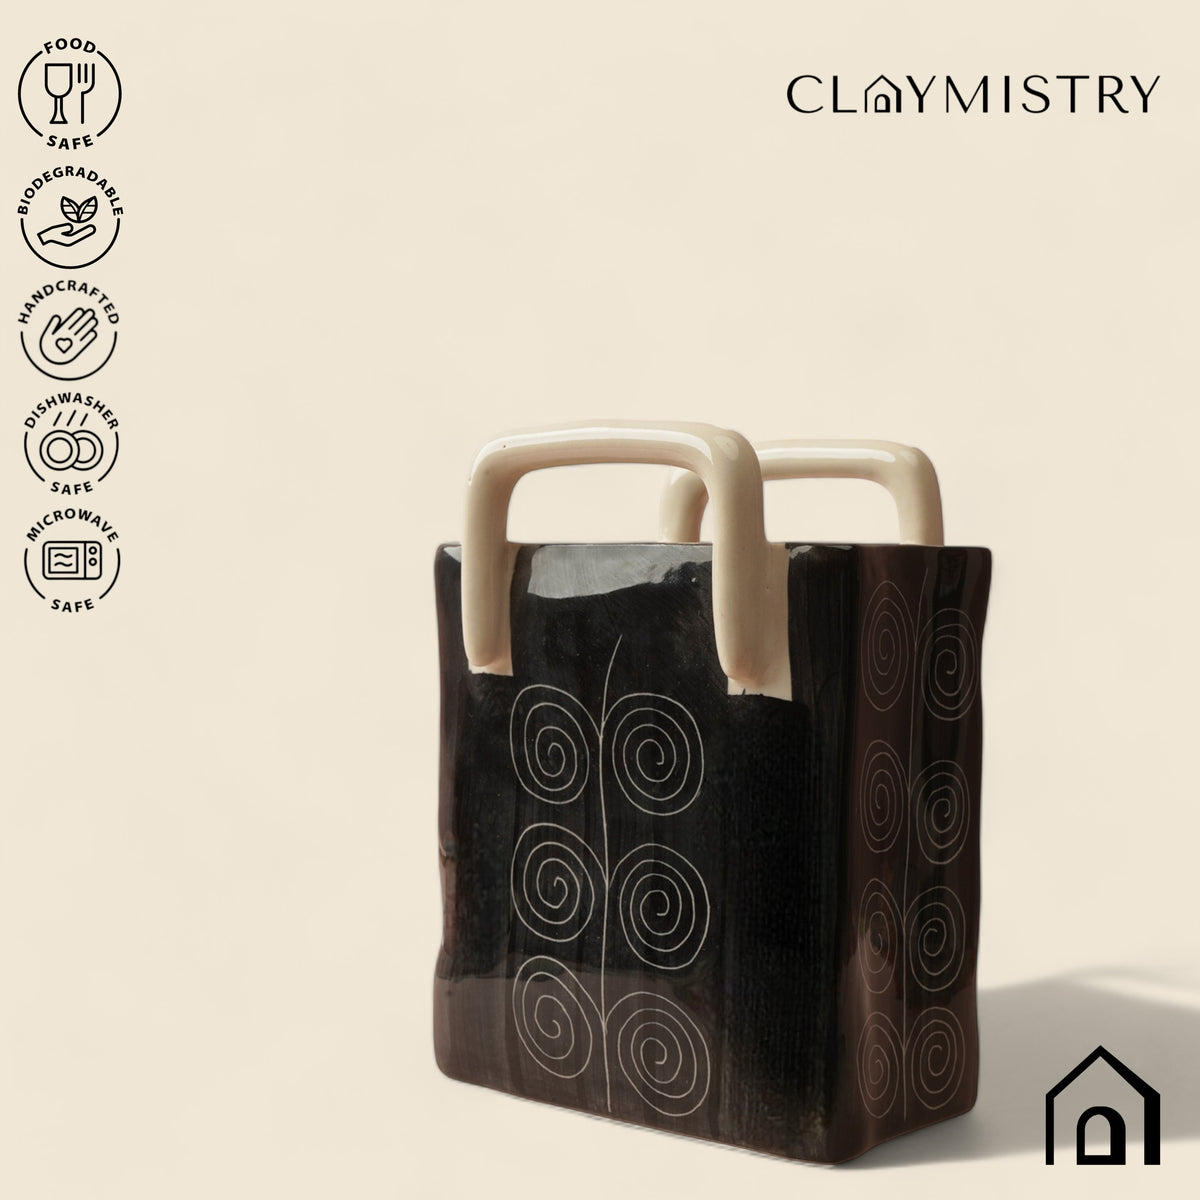 Claymistry Ceramic Black with White Design Bag Shaped Vase | 14cm * 7cm * 19cm | Glossy | Cutlery, Tissue Paper, Napkin Holder | Home Decor, Living Room, Office, Center Table Centrepiece Vase